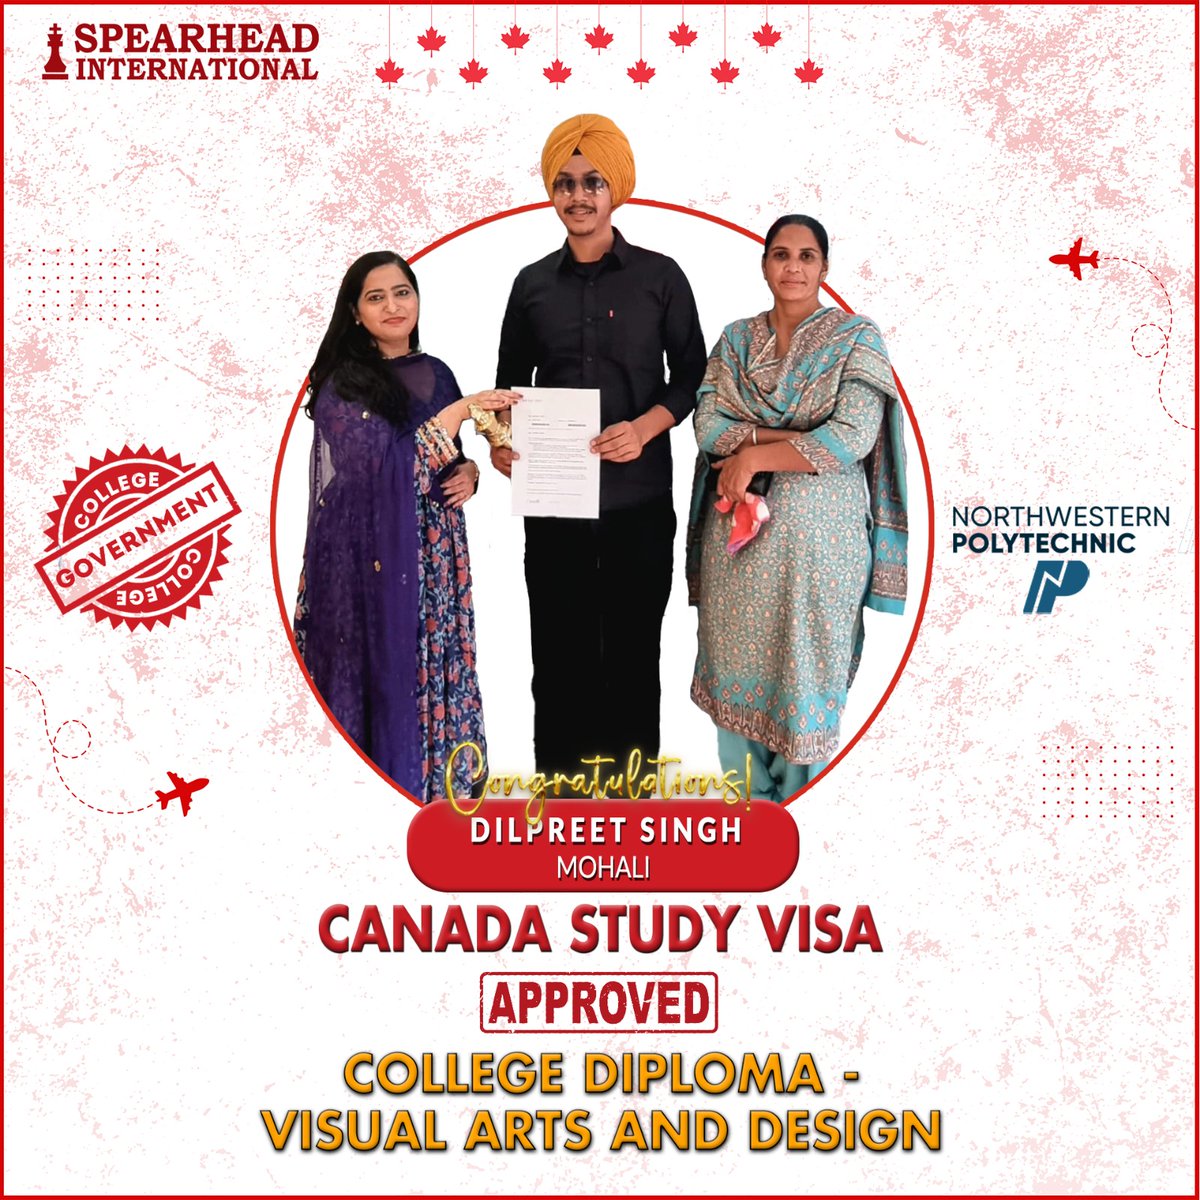 Congratulations, Dilpreet Singh For Canada Study visa 🇨🇦✈️ 🇨🇦🥳🤩

#canadastudyvisa #studyincanada #studyvisa #canadavisa #ielts #canadaimmigration #visa #studentvisa #immigration #australia #study #studyoverseas #canadapr #spearheadinternational